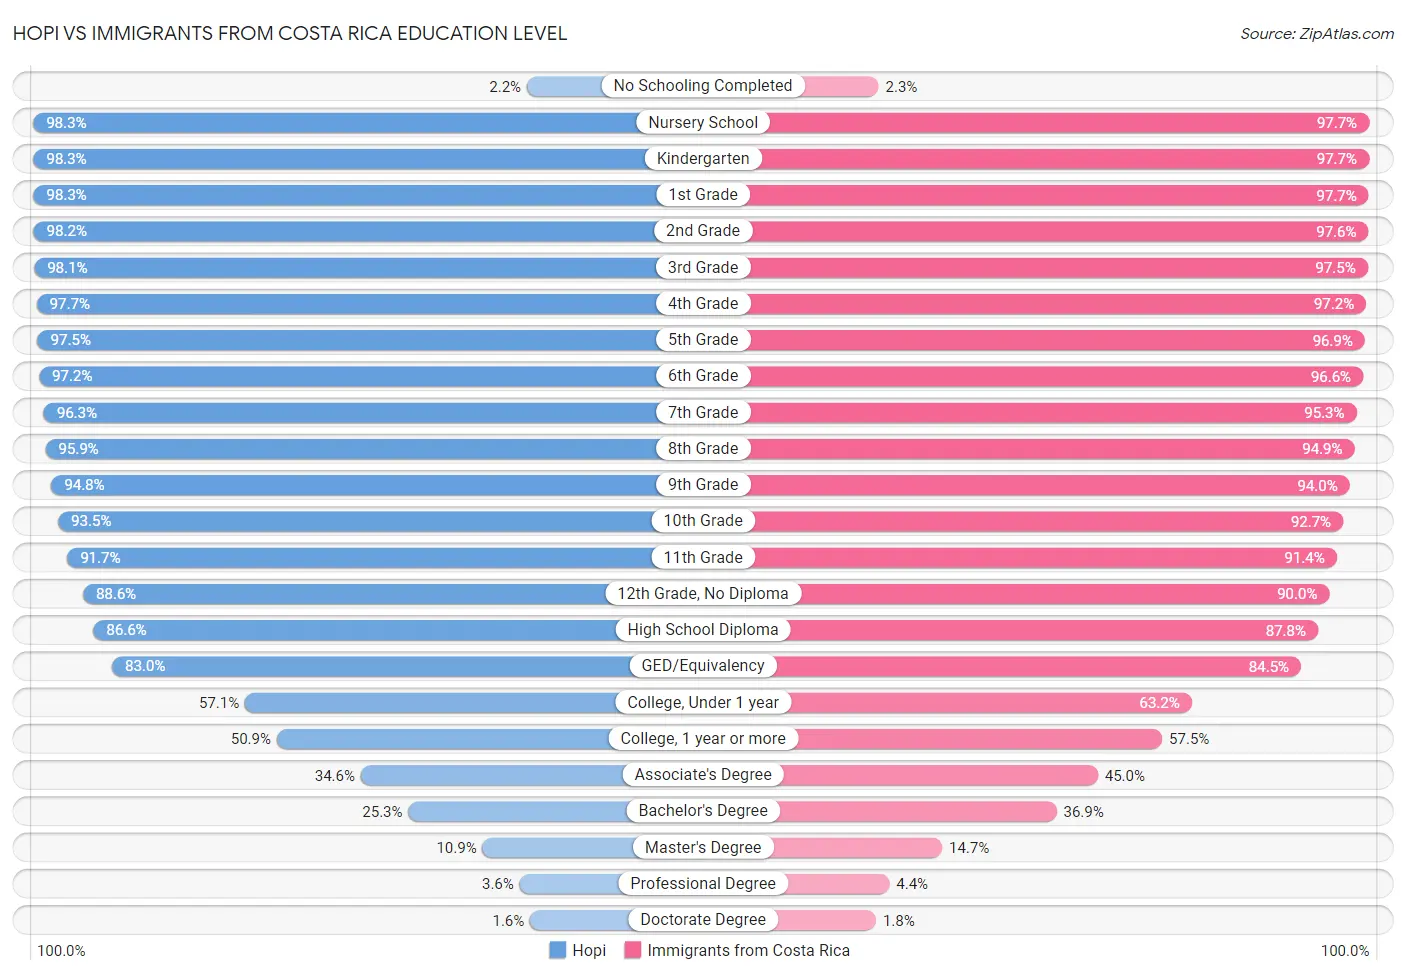 Hopi vs Immigrants from Costa Rica Education Level